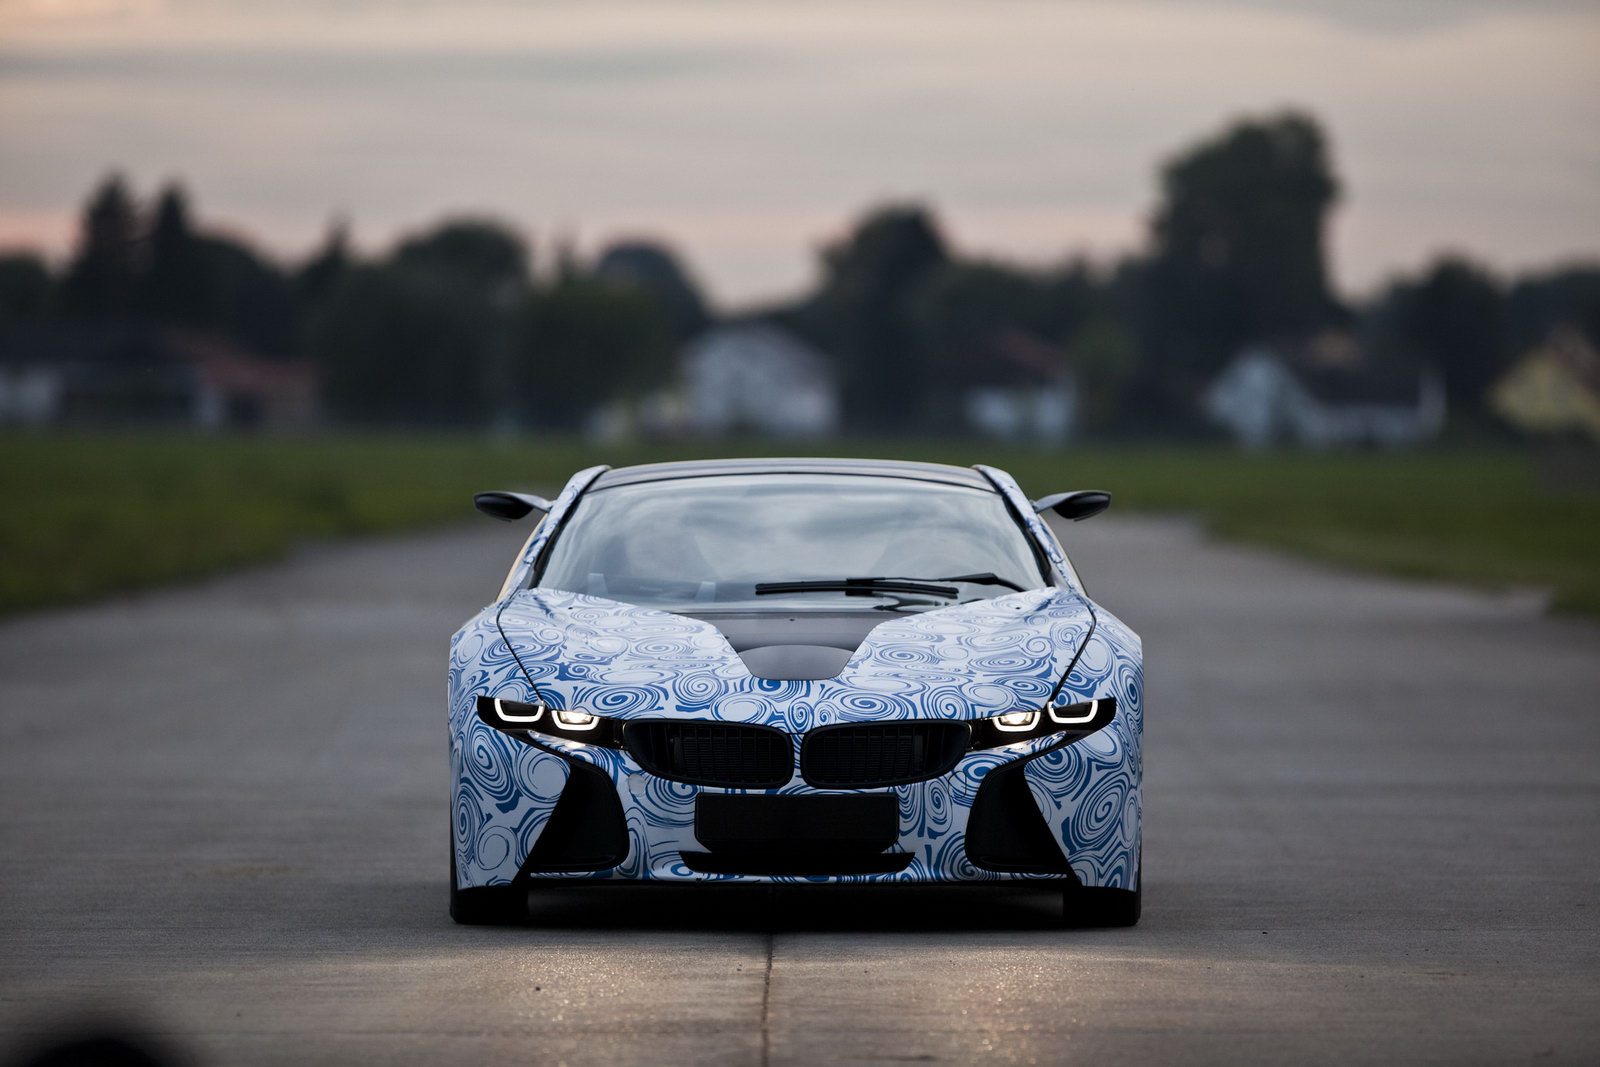 BMW Vision ED Concept